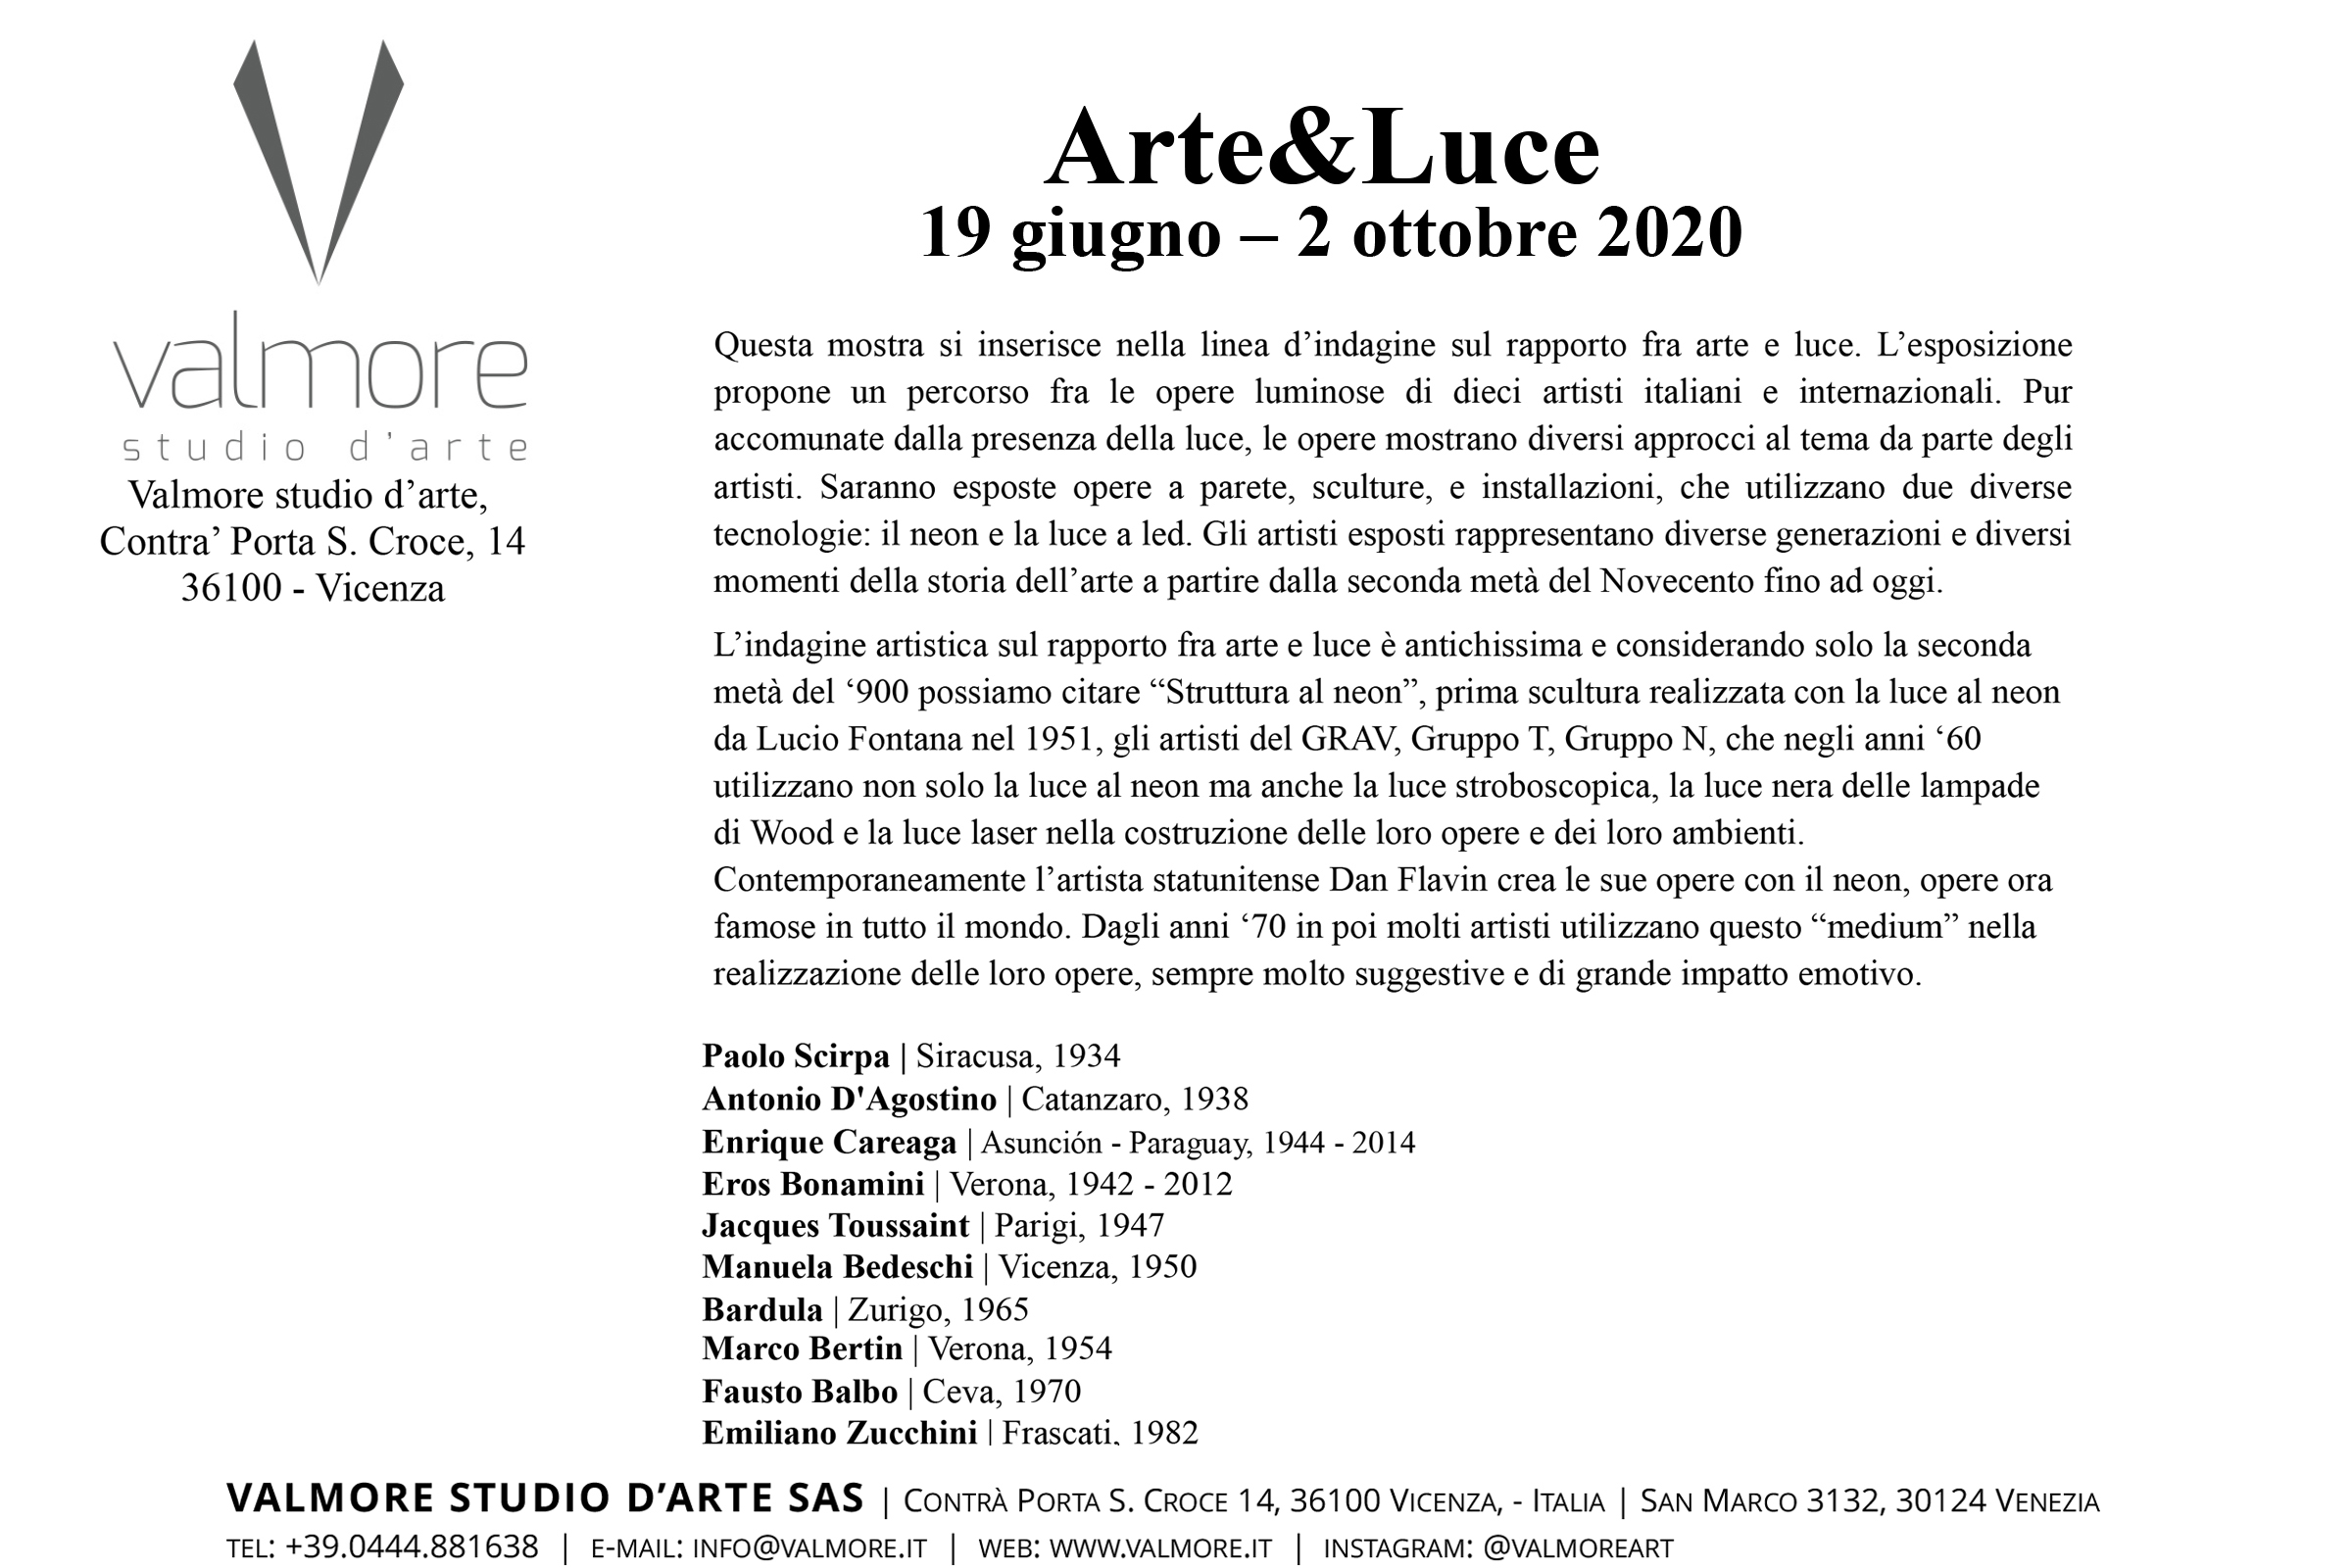 BARDULA - Bardula-Valmore studio d'Arte-Arte e Luce 02